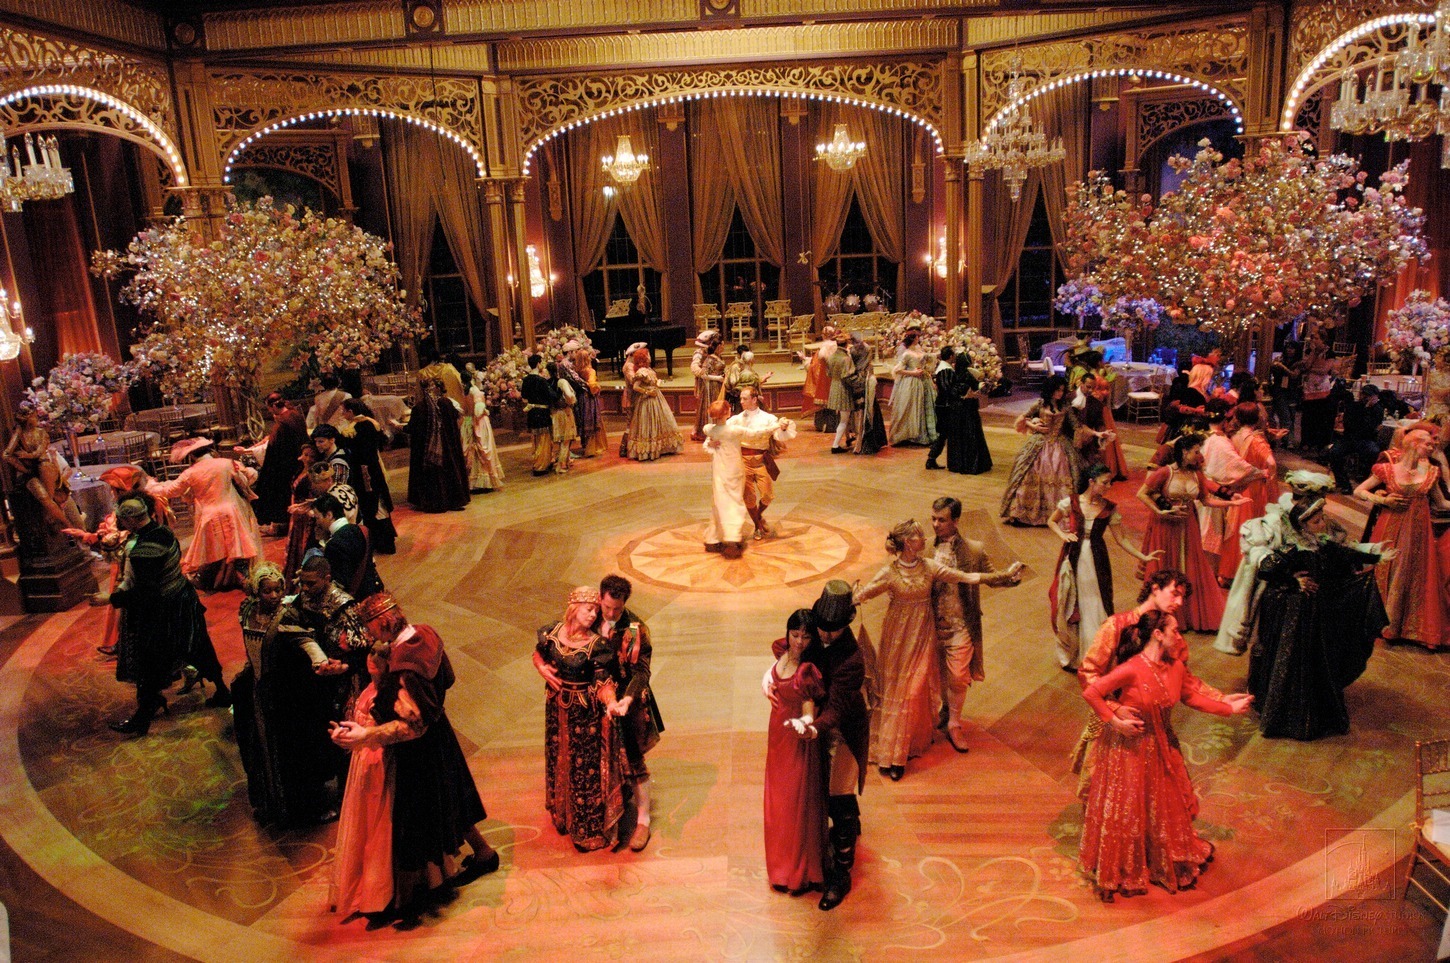 Enchanted-Ballroom-BTS-enchanted-13461893-1450-963.jpg